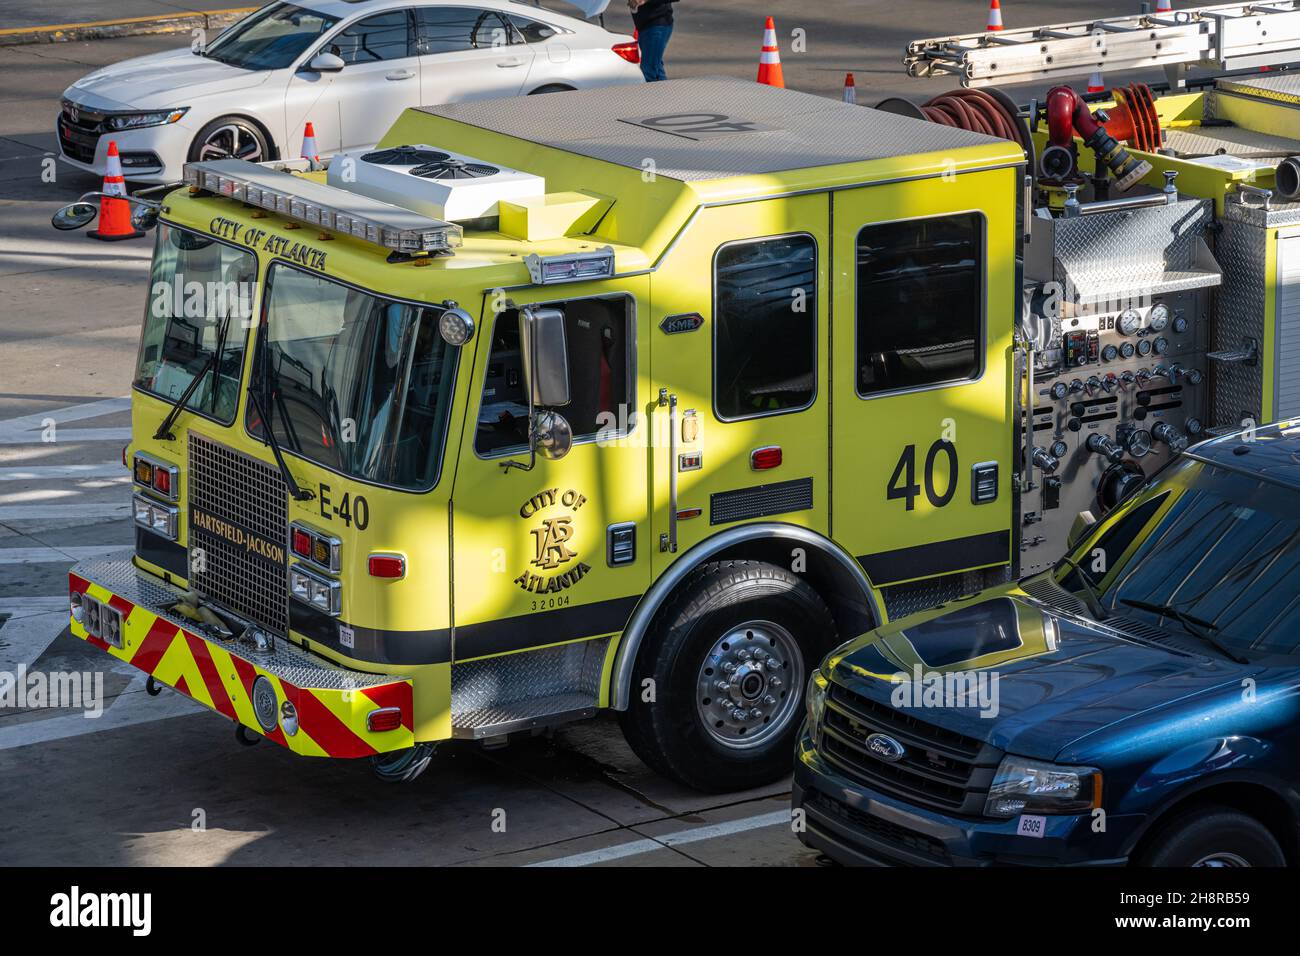 Atlanta Fire Rescue Department's Engine 40 fire truck at Hartsfield-Jackson Atlanta International Airport in Atlanta, Georgia. (USA) Stock Photo